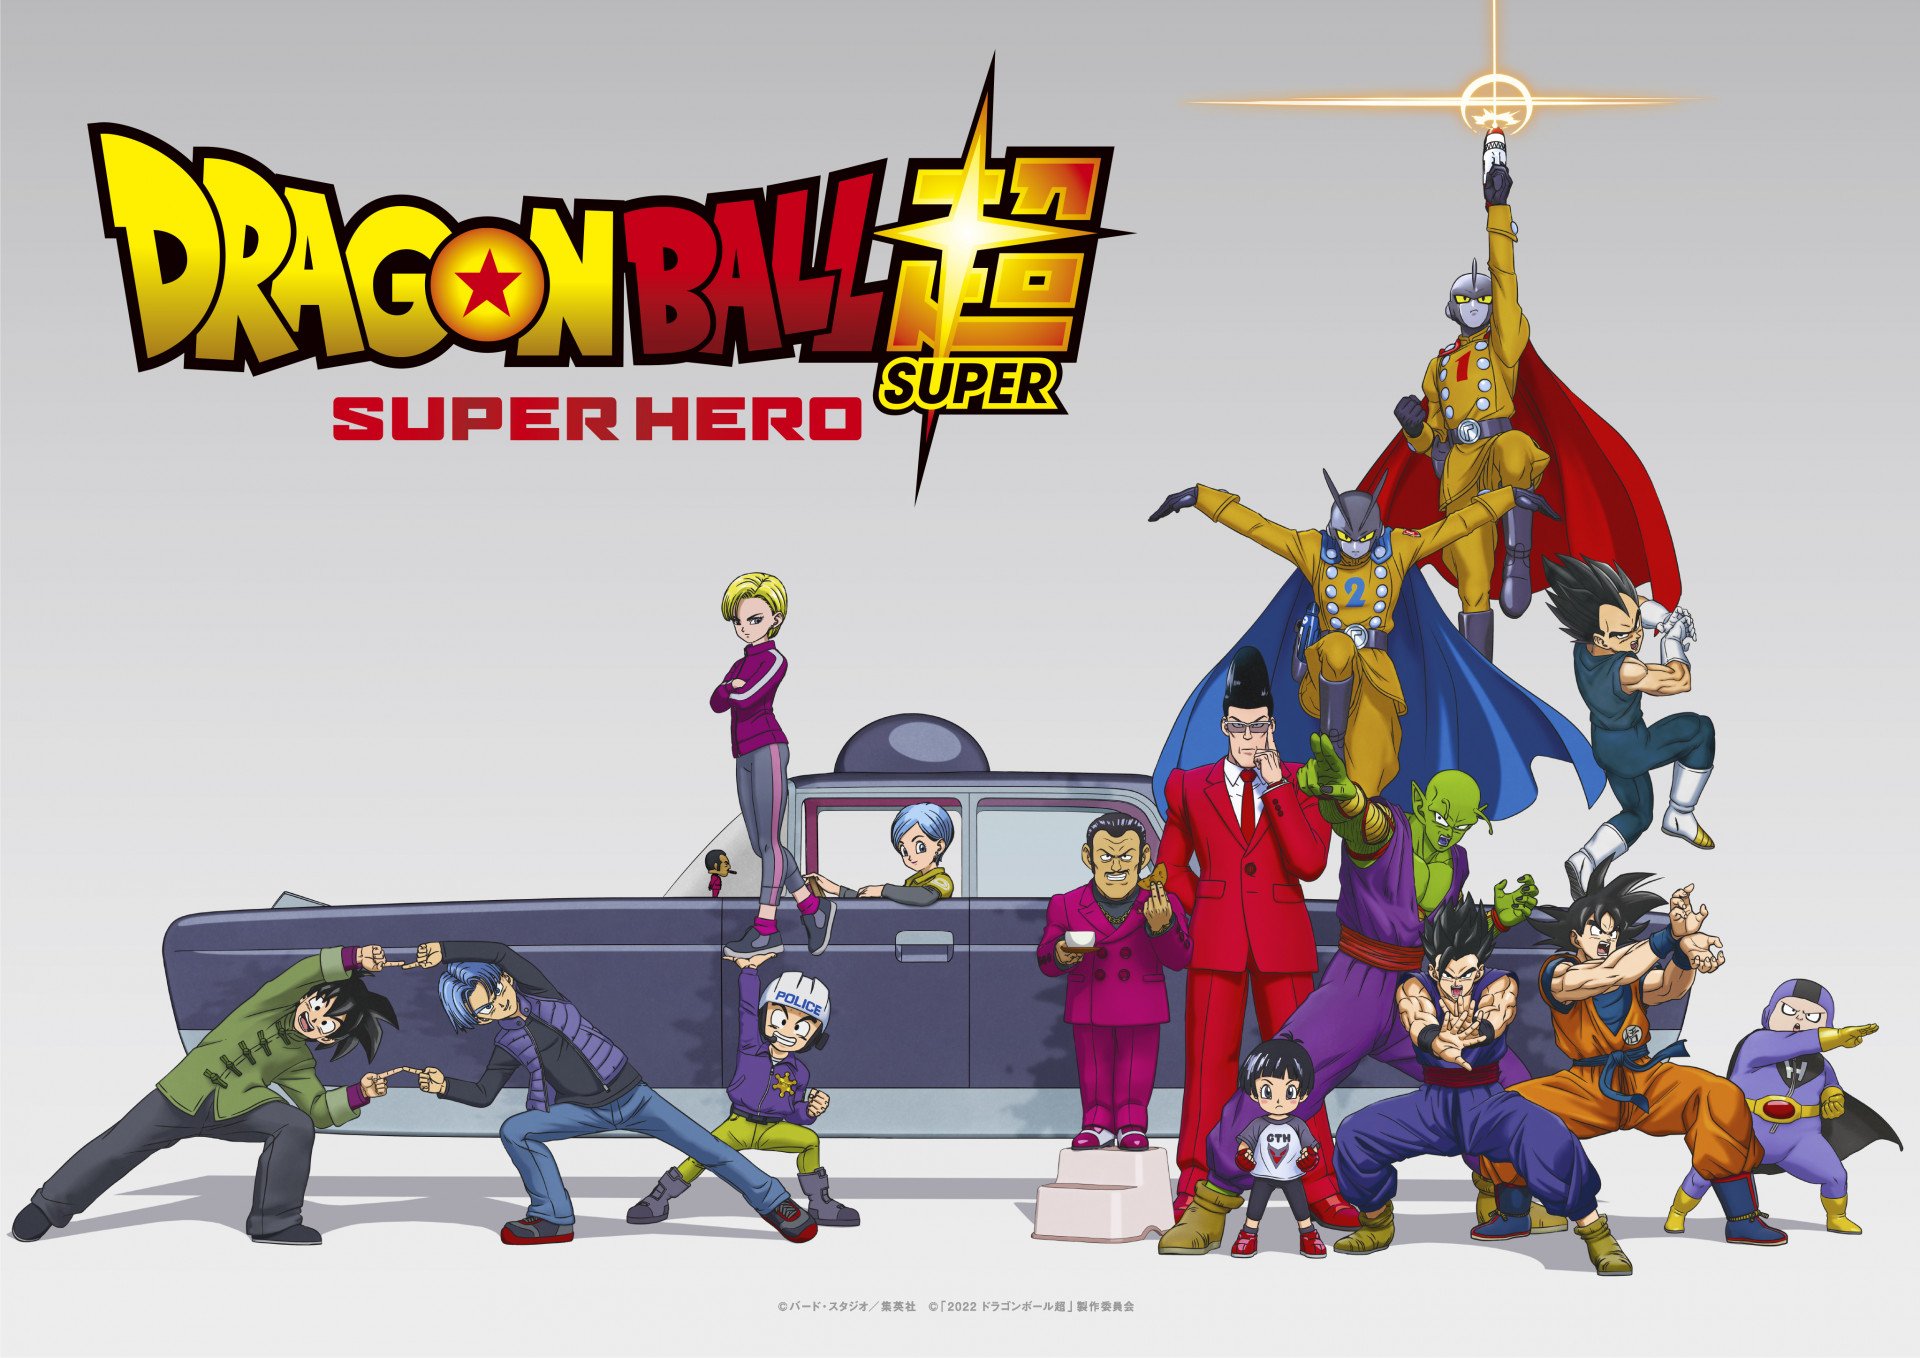 Top 10 Dragon Ball Super: Super Hero Easter Eggs